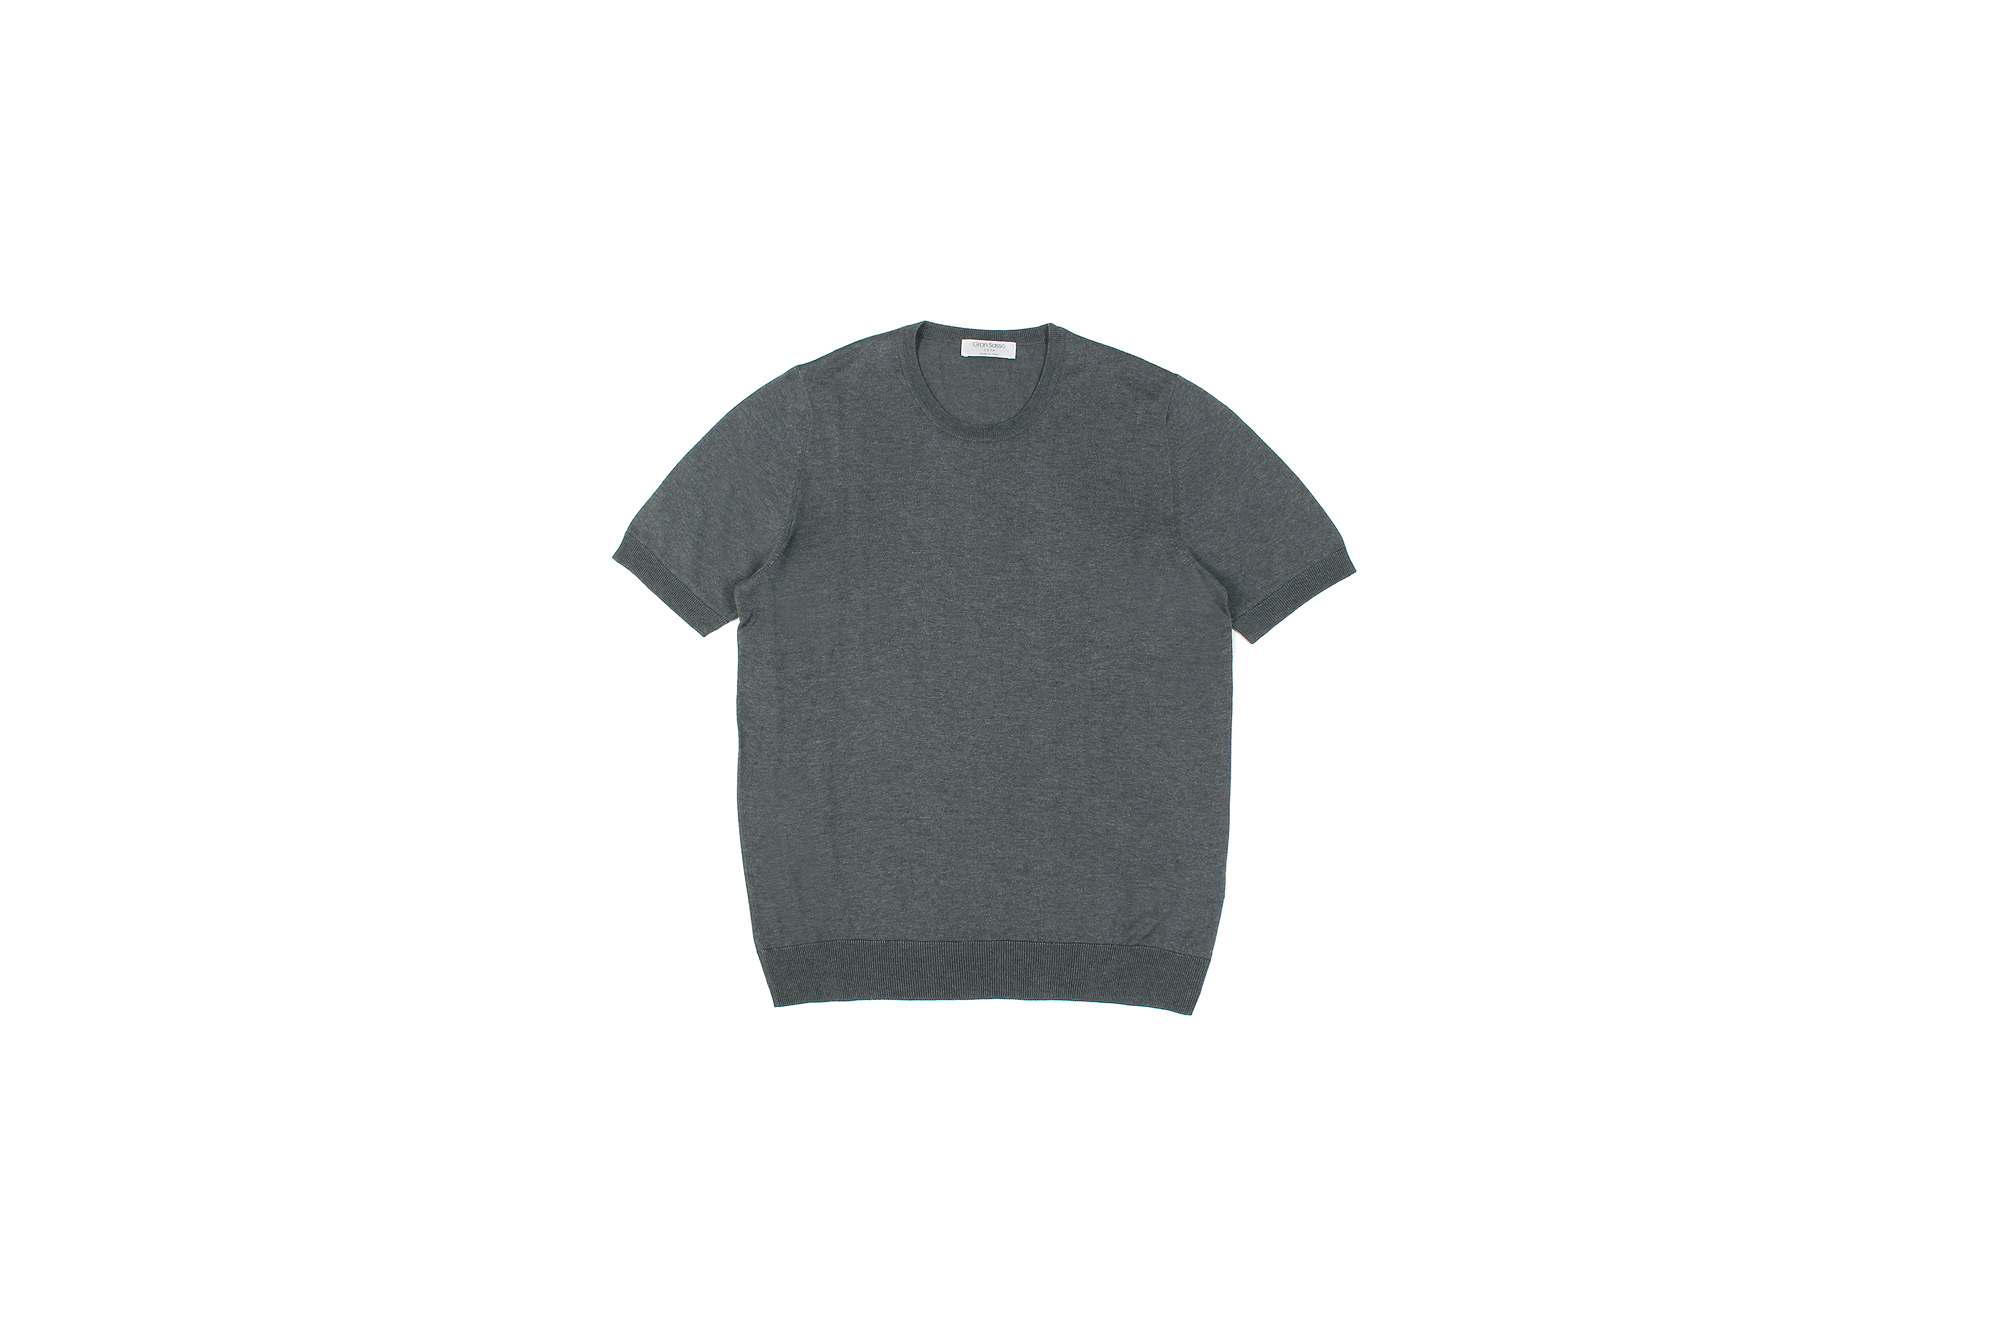 Gran Sasso (グランサッソ) Silk Knit T-shirt (シルクニット Tシャツ) SETA (シルク 100%) ショートスリーブ シルク ニット Tシャツ GREY (グレー・097)　made in italy (イタリア製) 2020 春夏新作 gransasso 愛知 名古屋 altoediritto アルトエデリット